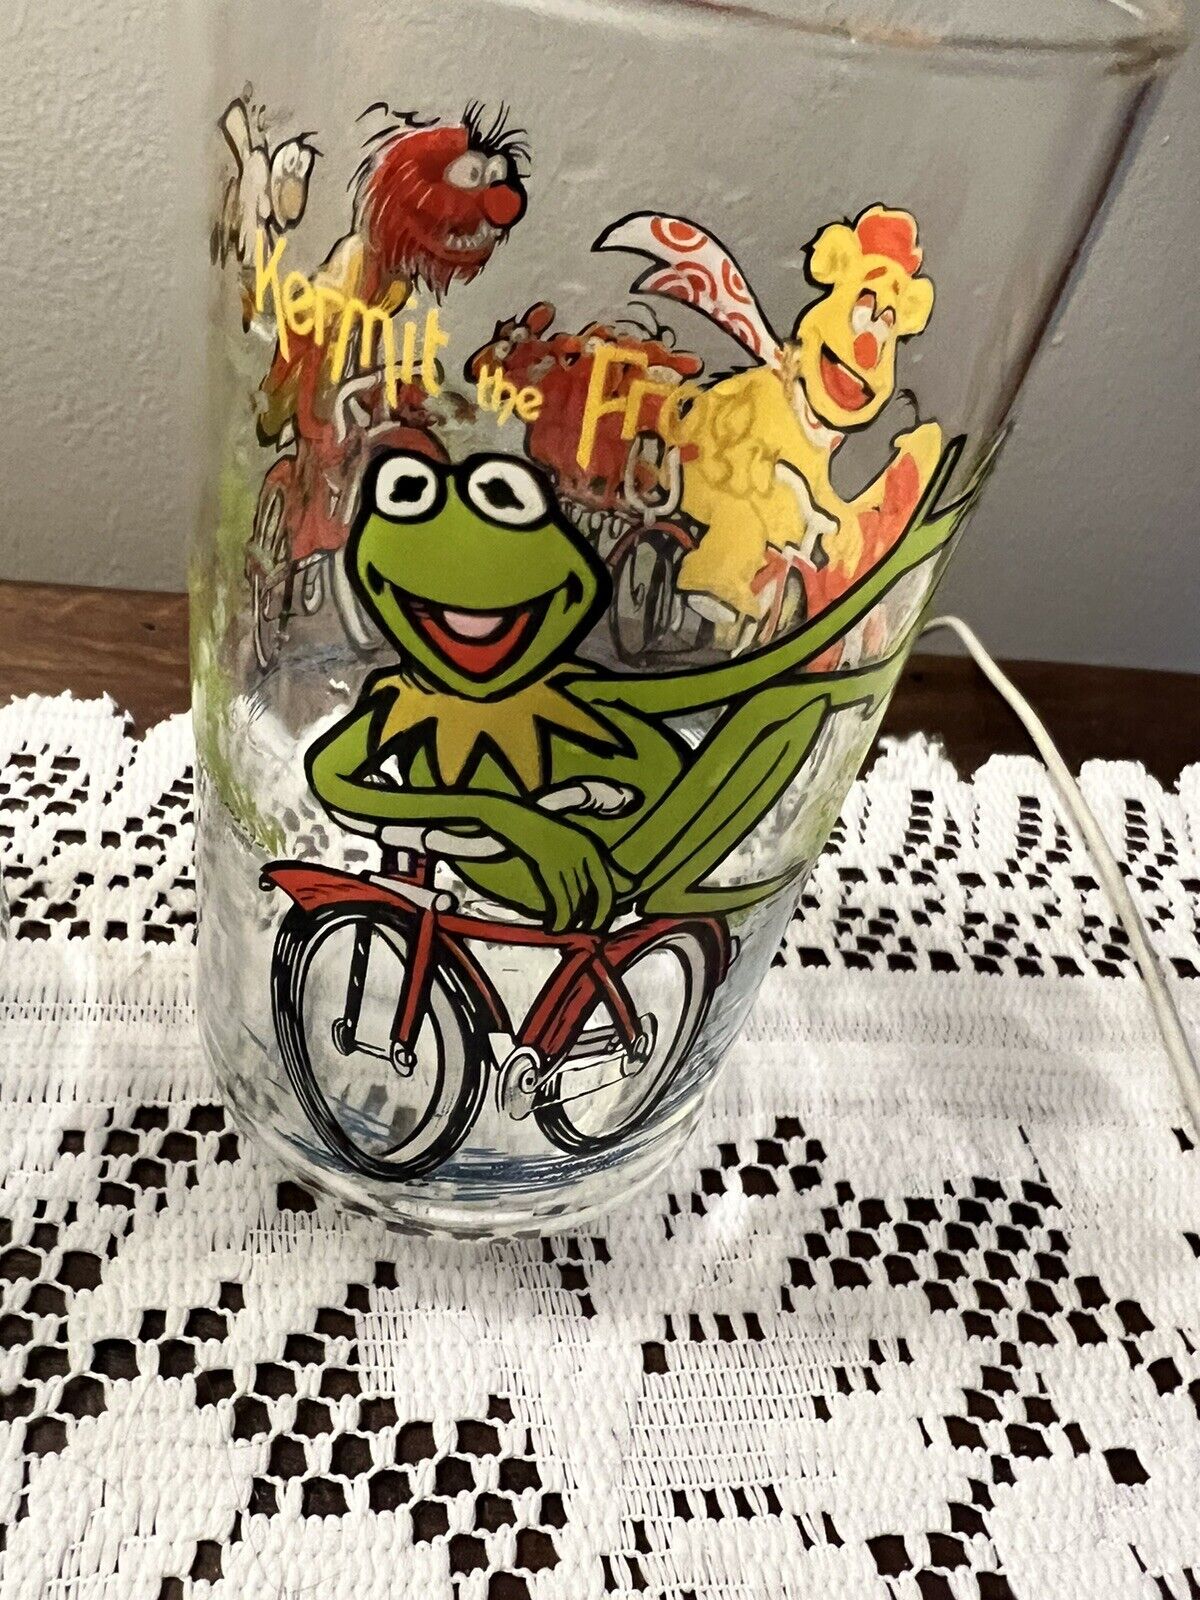 1981 McDonalds The Great Muppet Caper Drinking Glass Tumbler Jim Henson Kermit 2